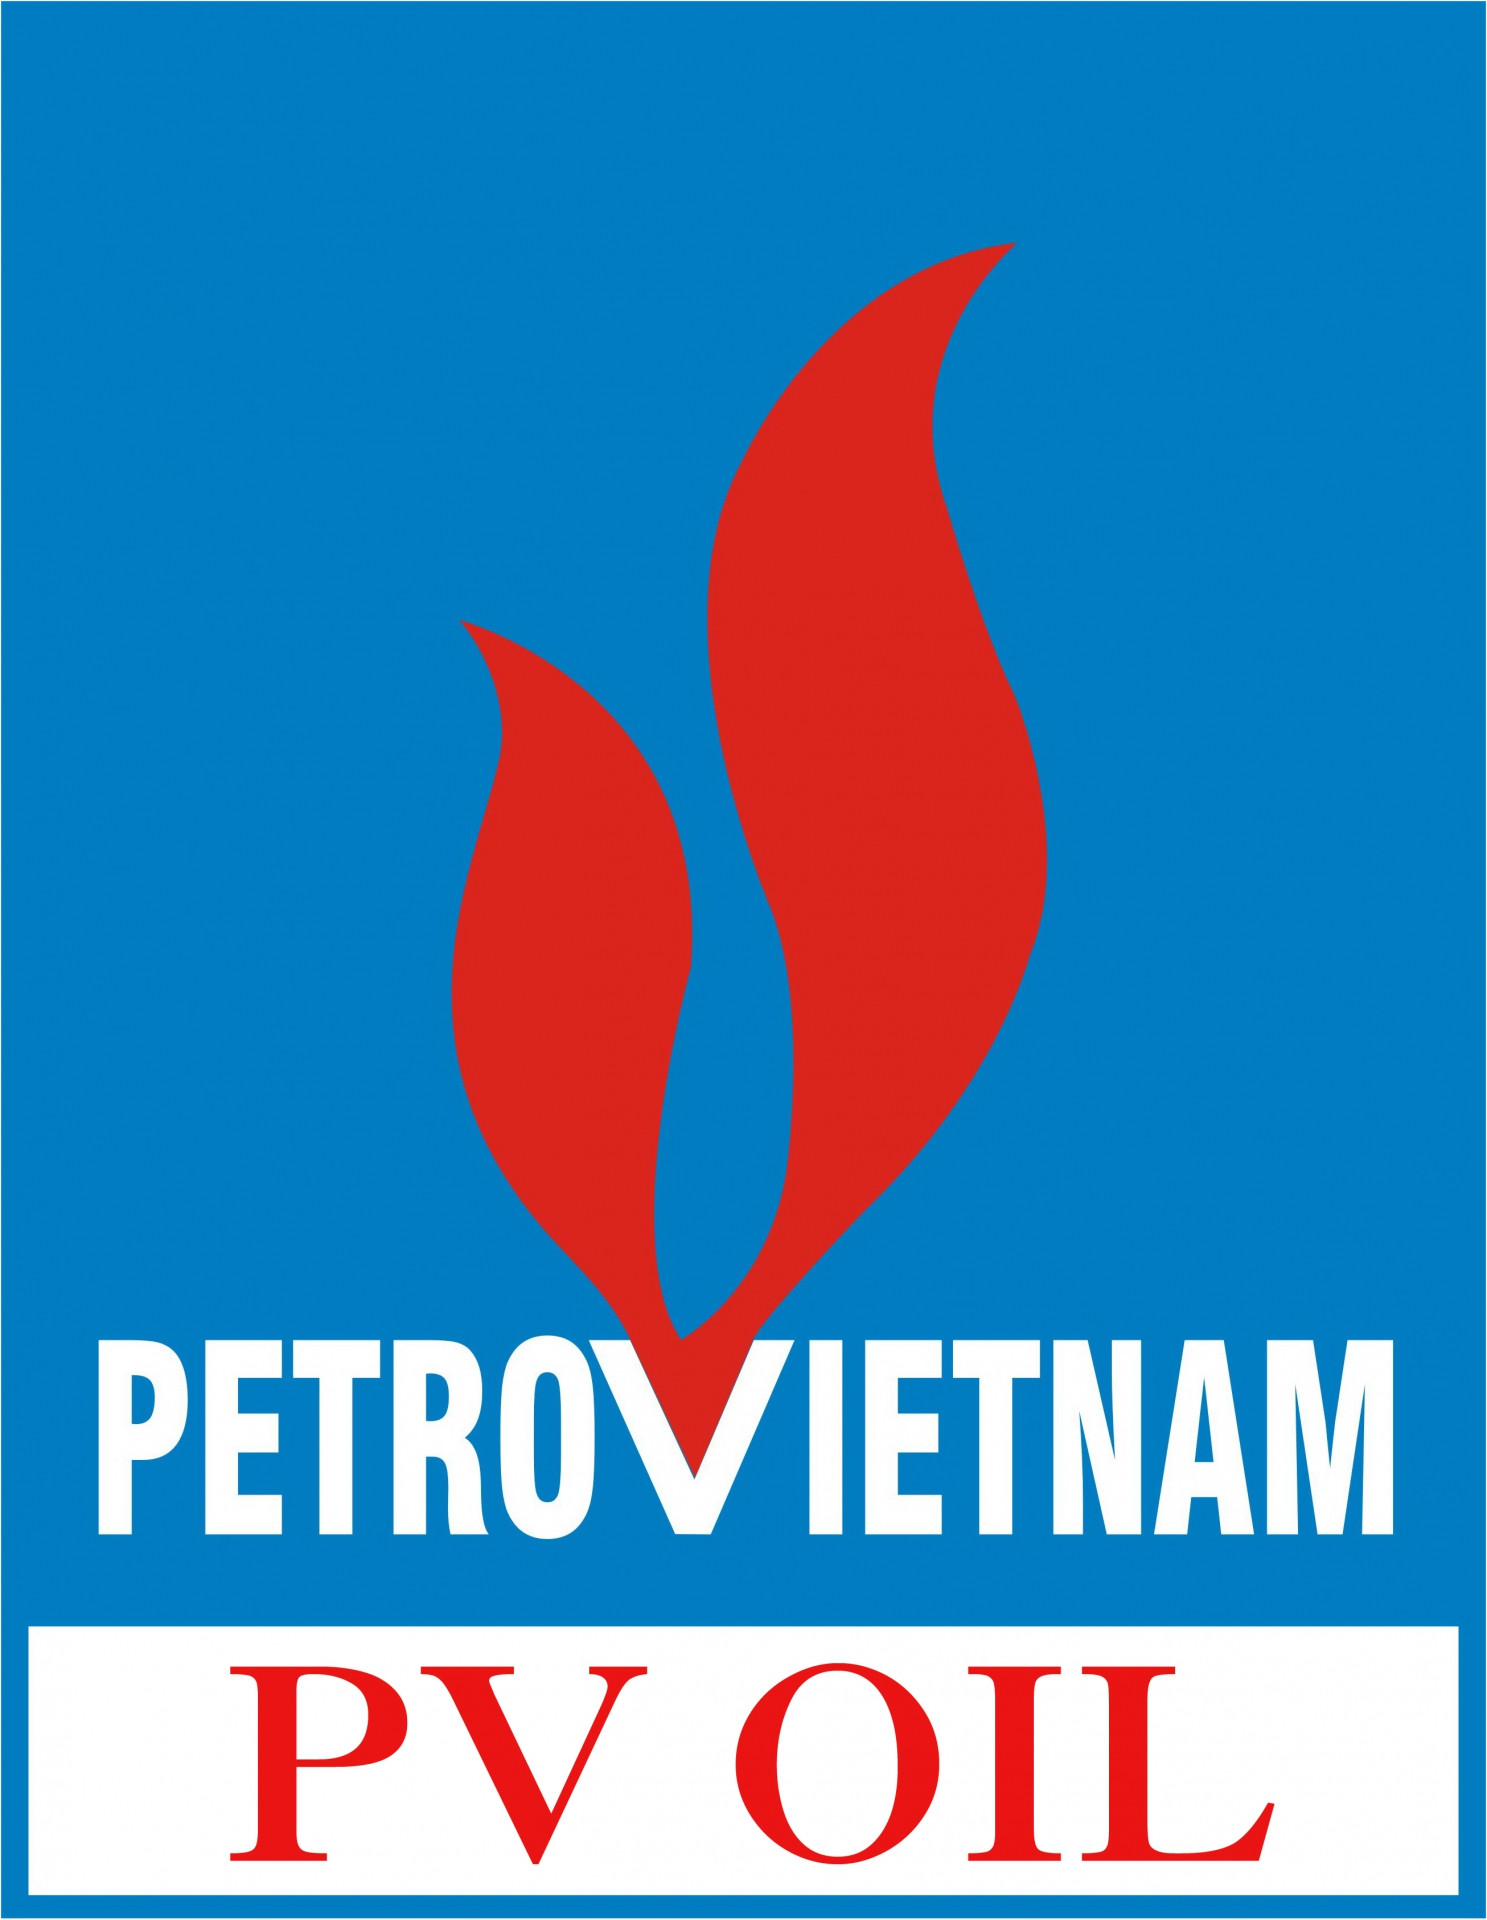 PVOIL - PetroVietnam Oil Corporation